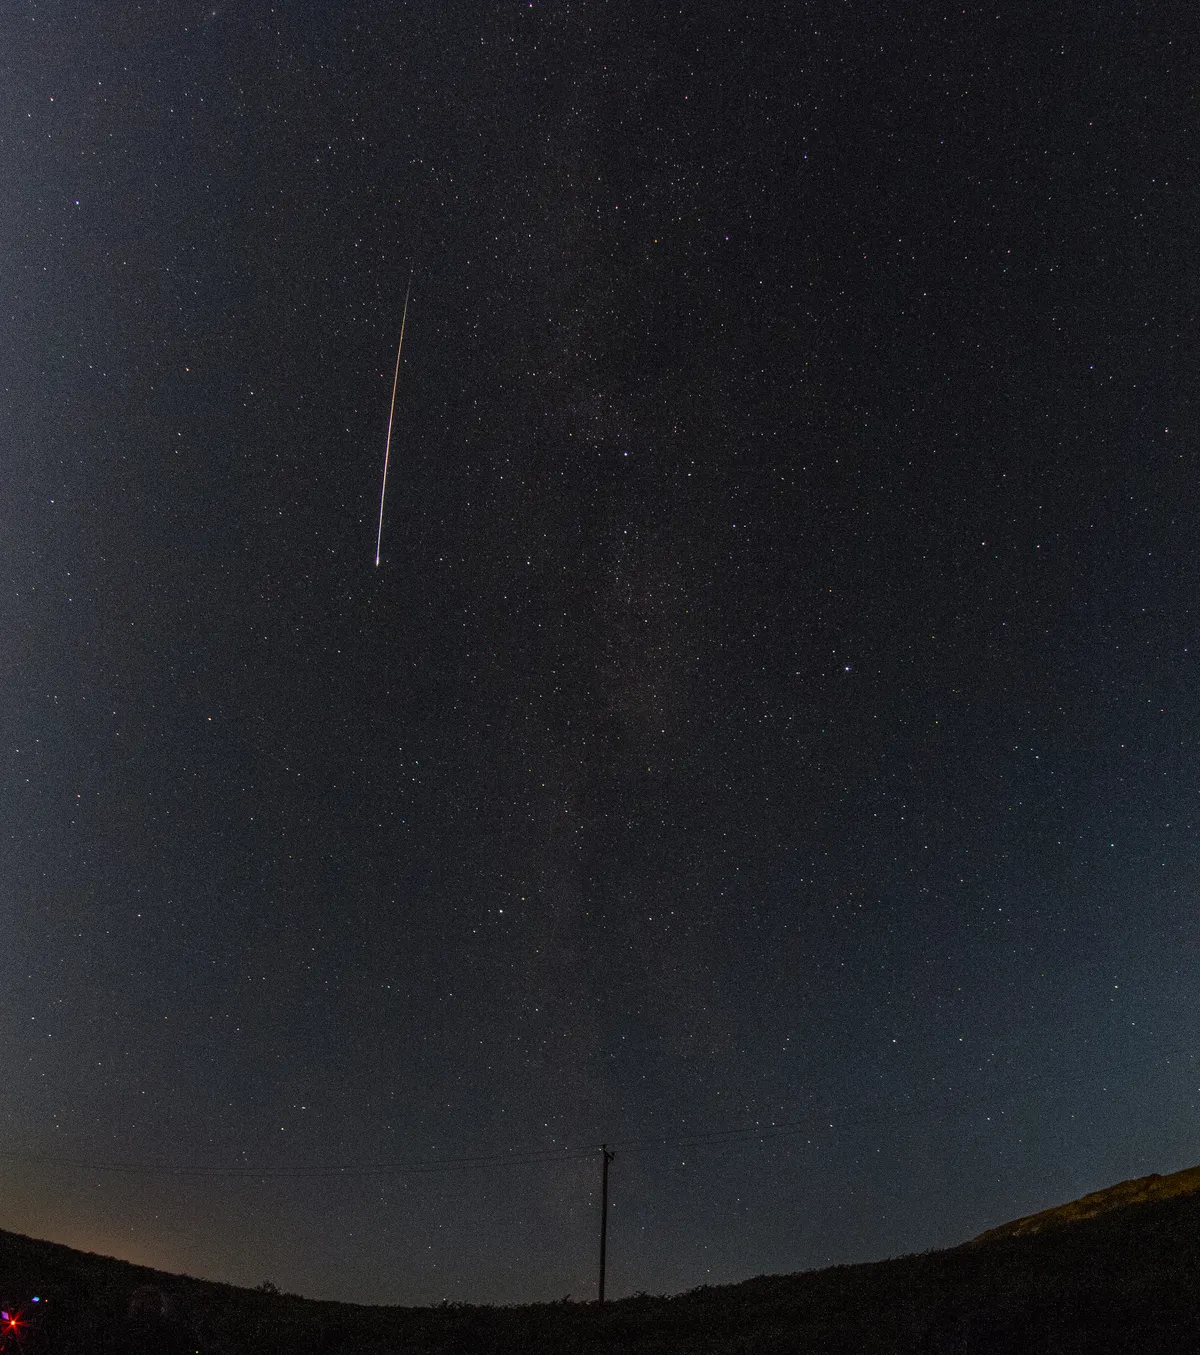 2017 Perseid Meteor by Davy Cannon, Hamilton, Scotland, UK. Equipment: Canon EOS 60Da DSLR, Samyang 8mm fisheye lens